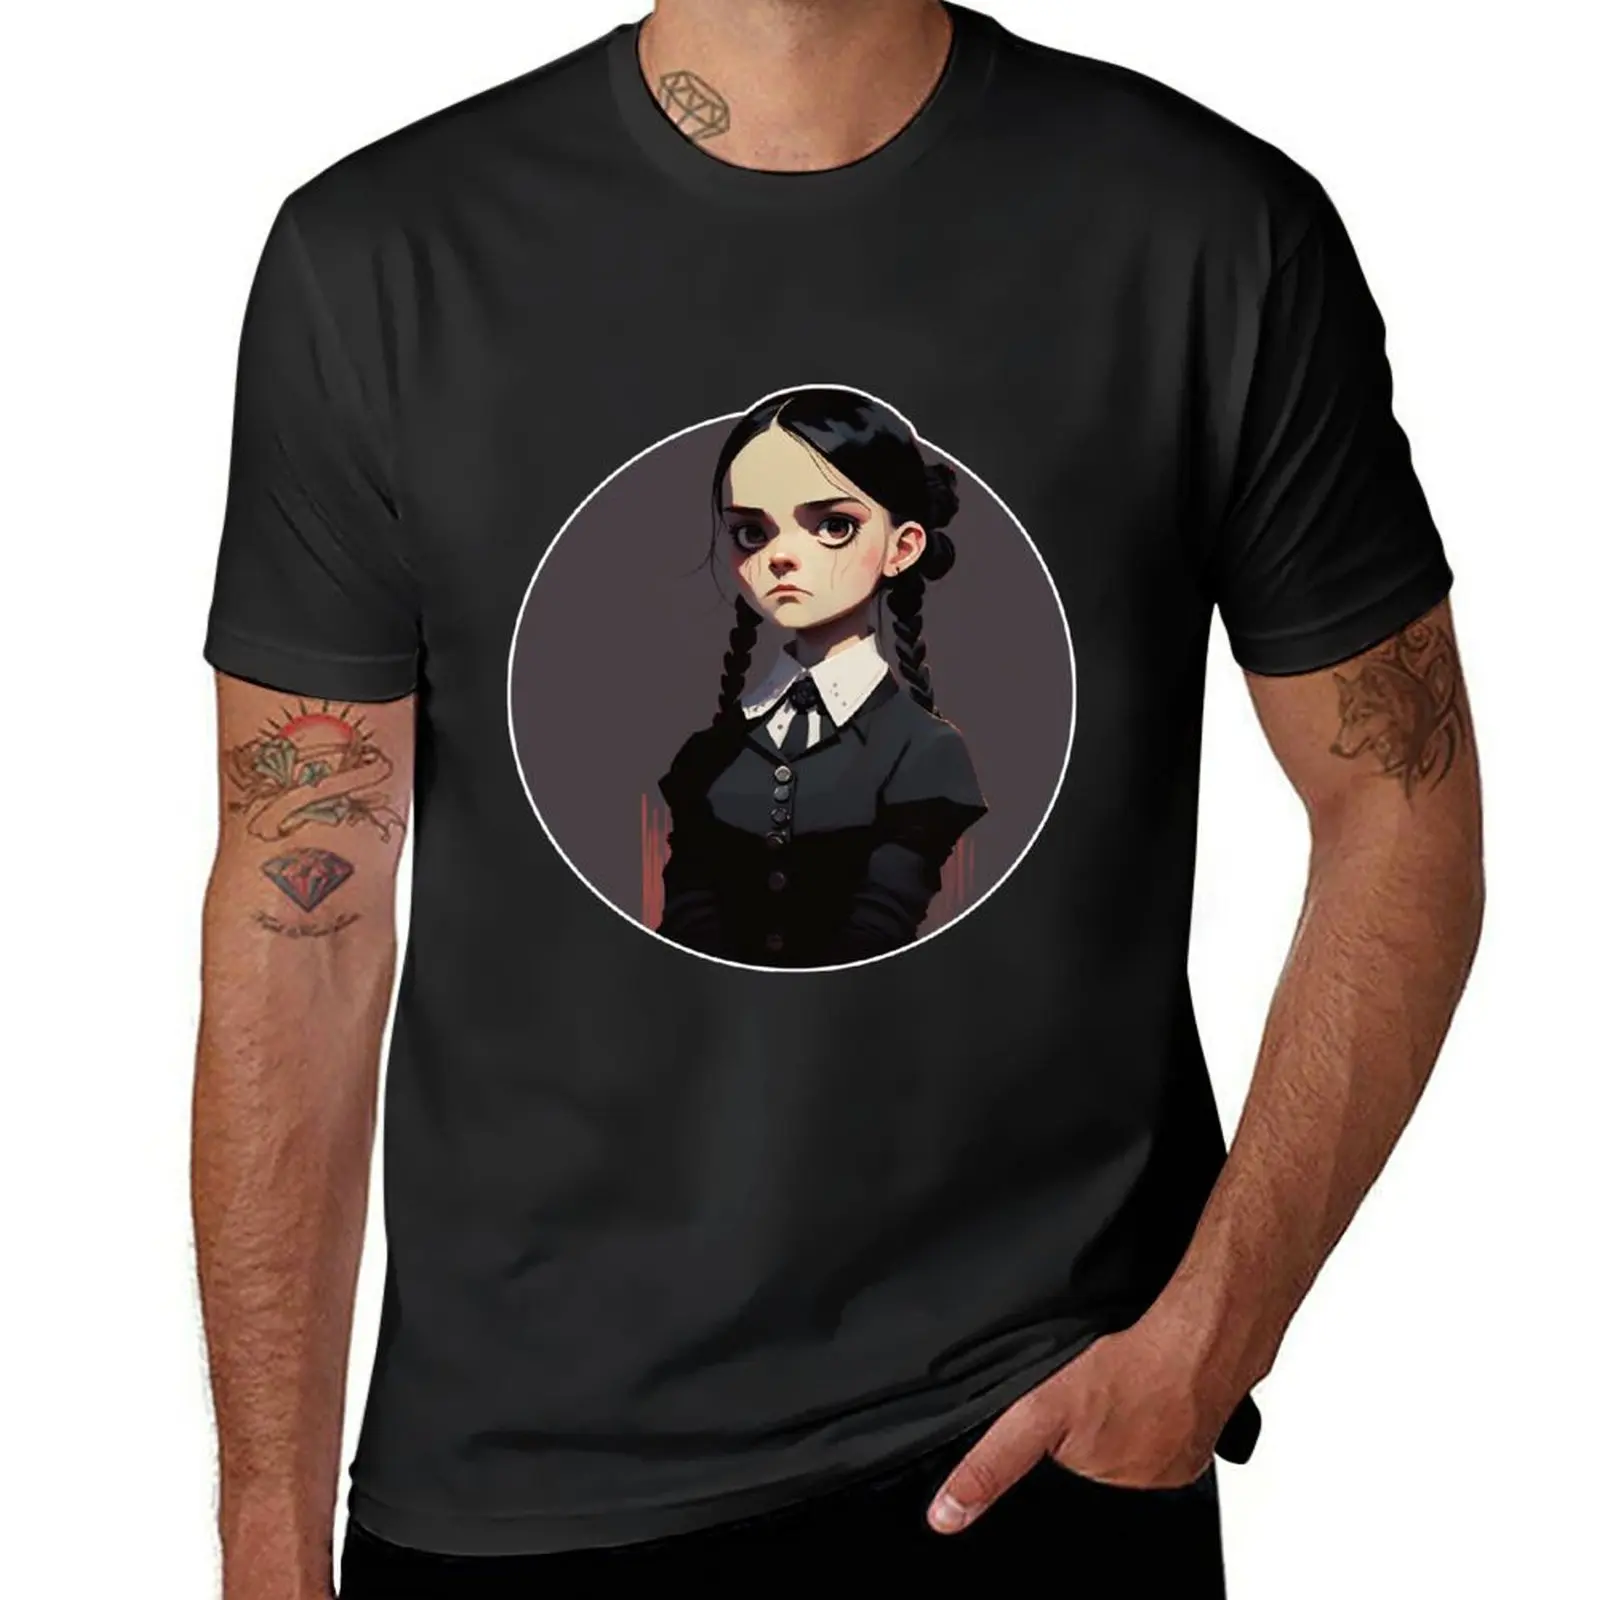 New Wednesday Addams T-Shirt quick drying shirt cute tops Short t-shirt vintage t shirt men t shirt